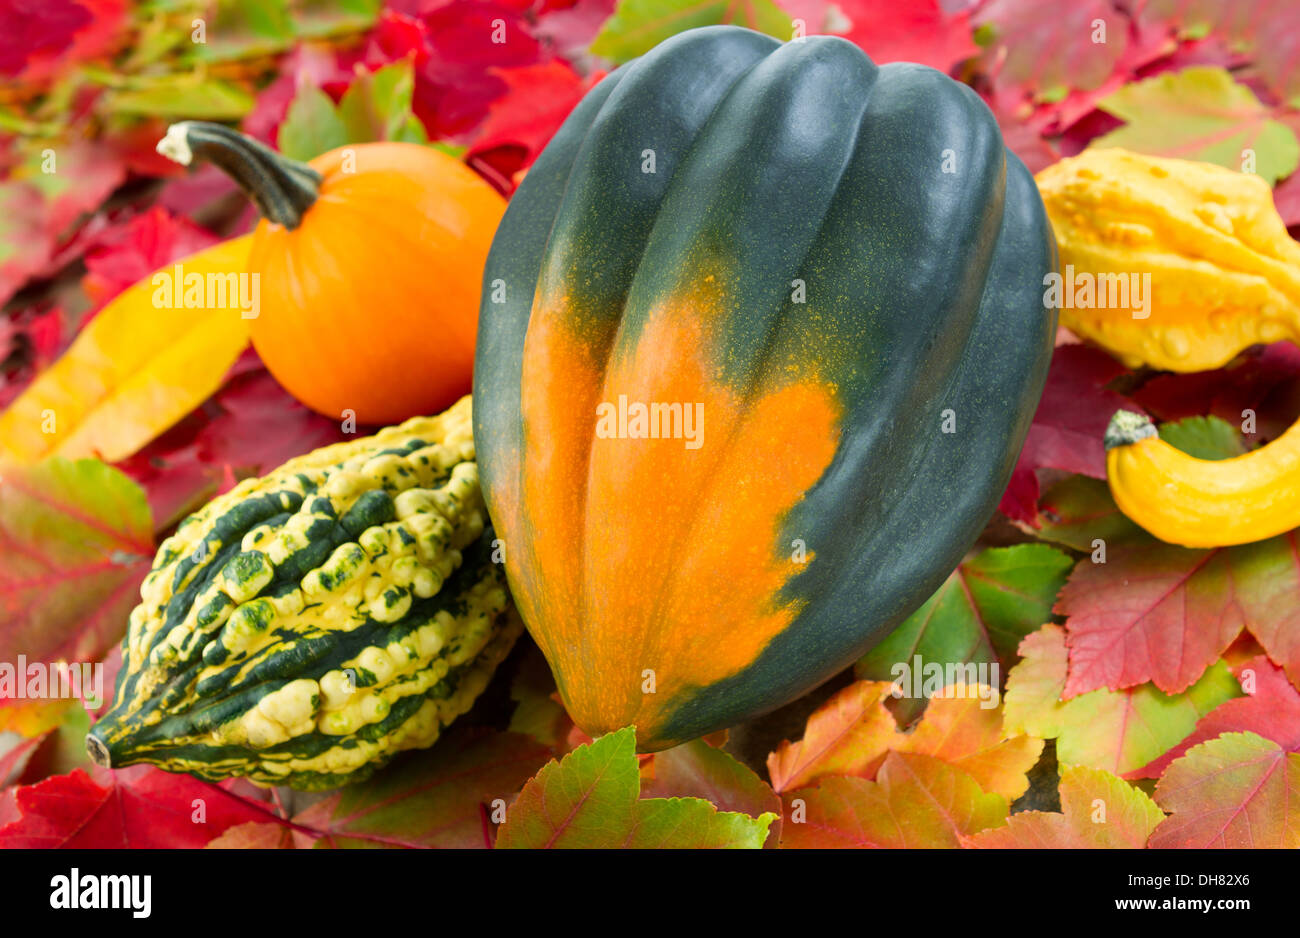 Closeup photo of large acorn squash with small pumpkin, decorative squash and autumn leaves Stock Photo